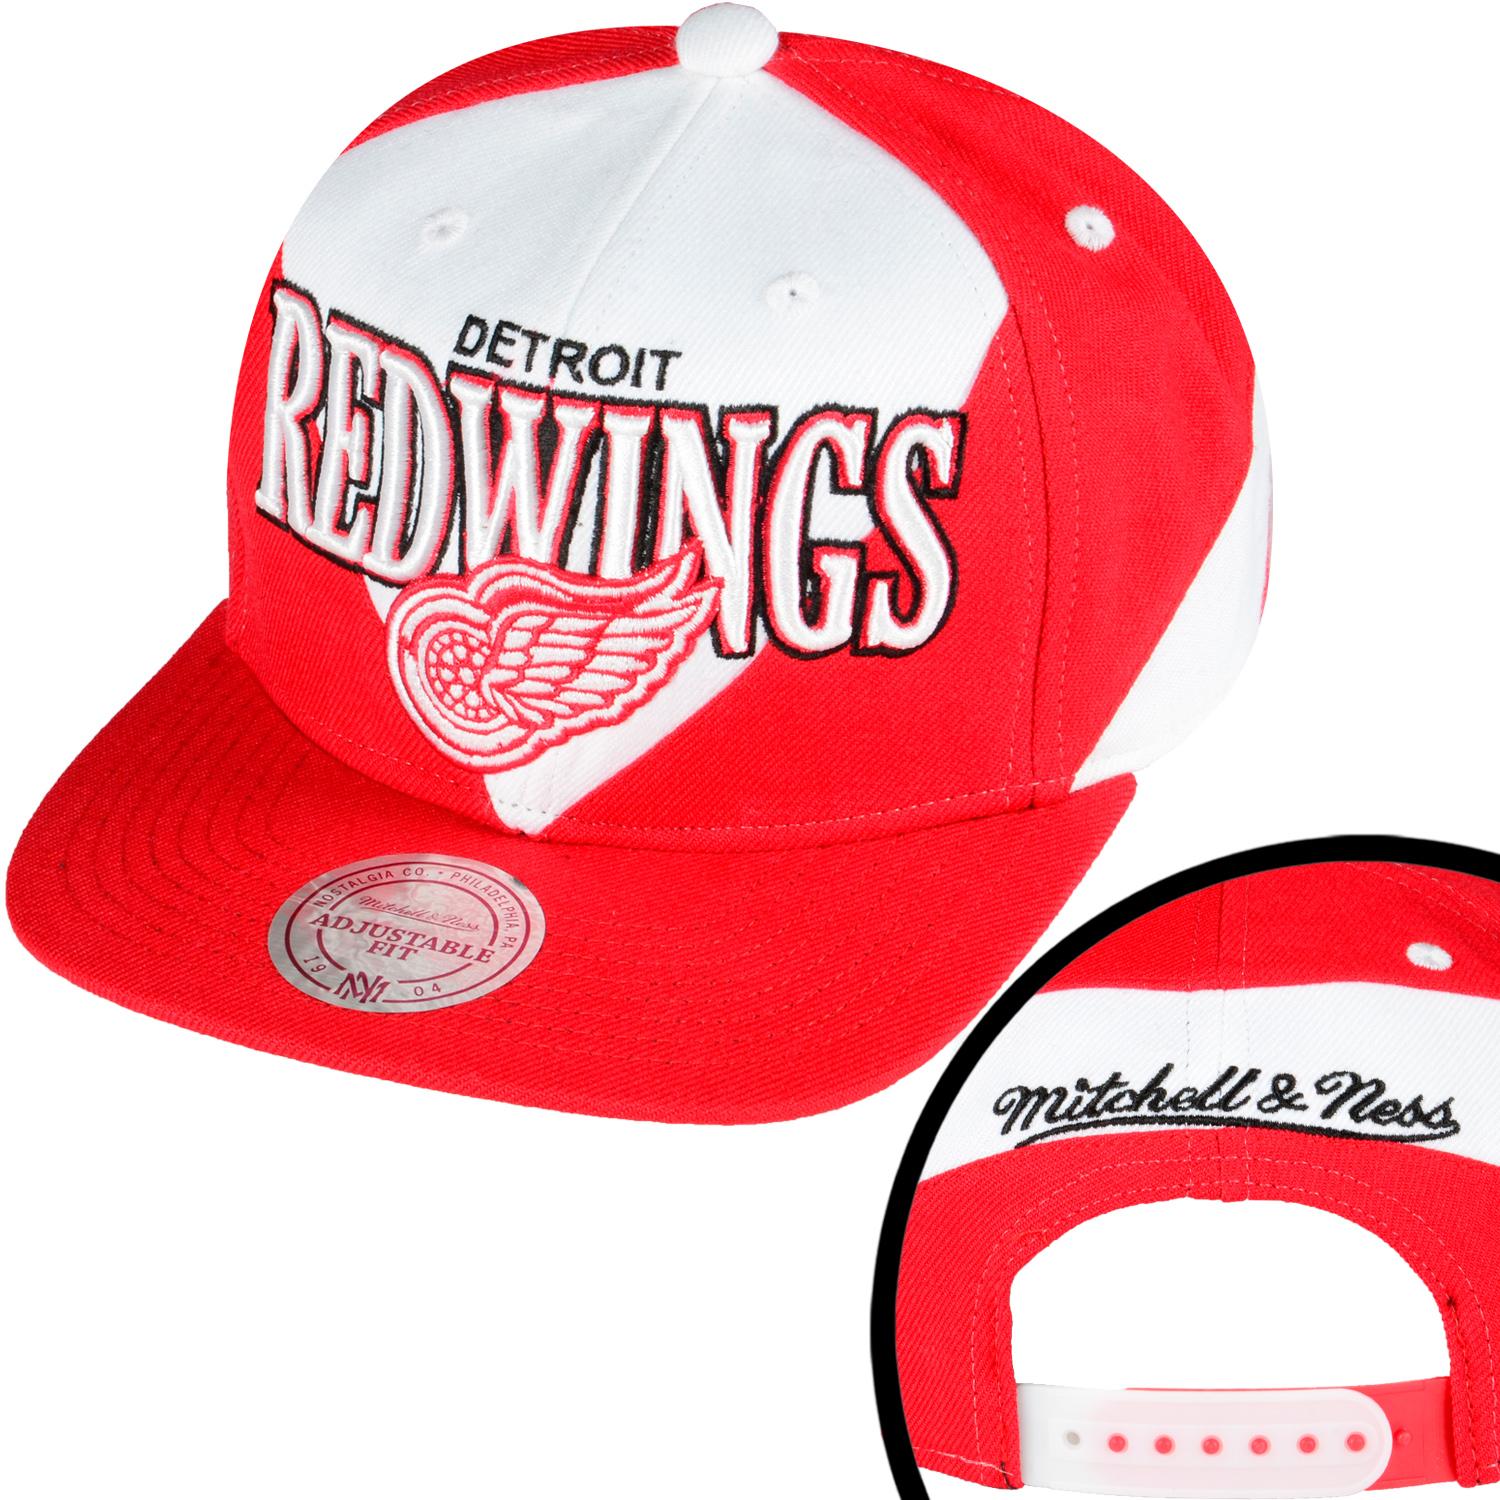 Foto Mitchell & Ness Tripanel Detroit Red Wings Hombres Snapback Cap Roj... foto 923647